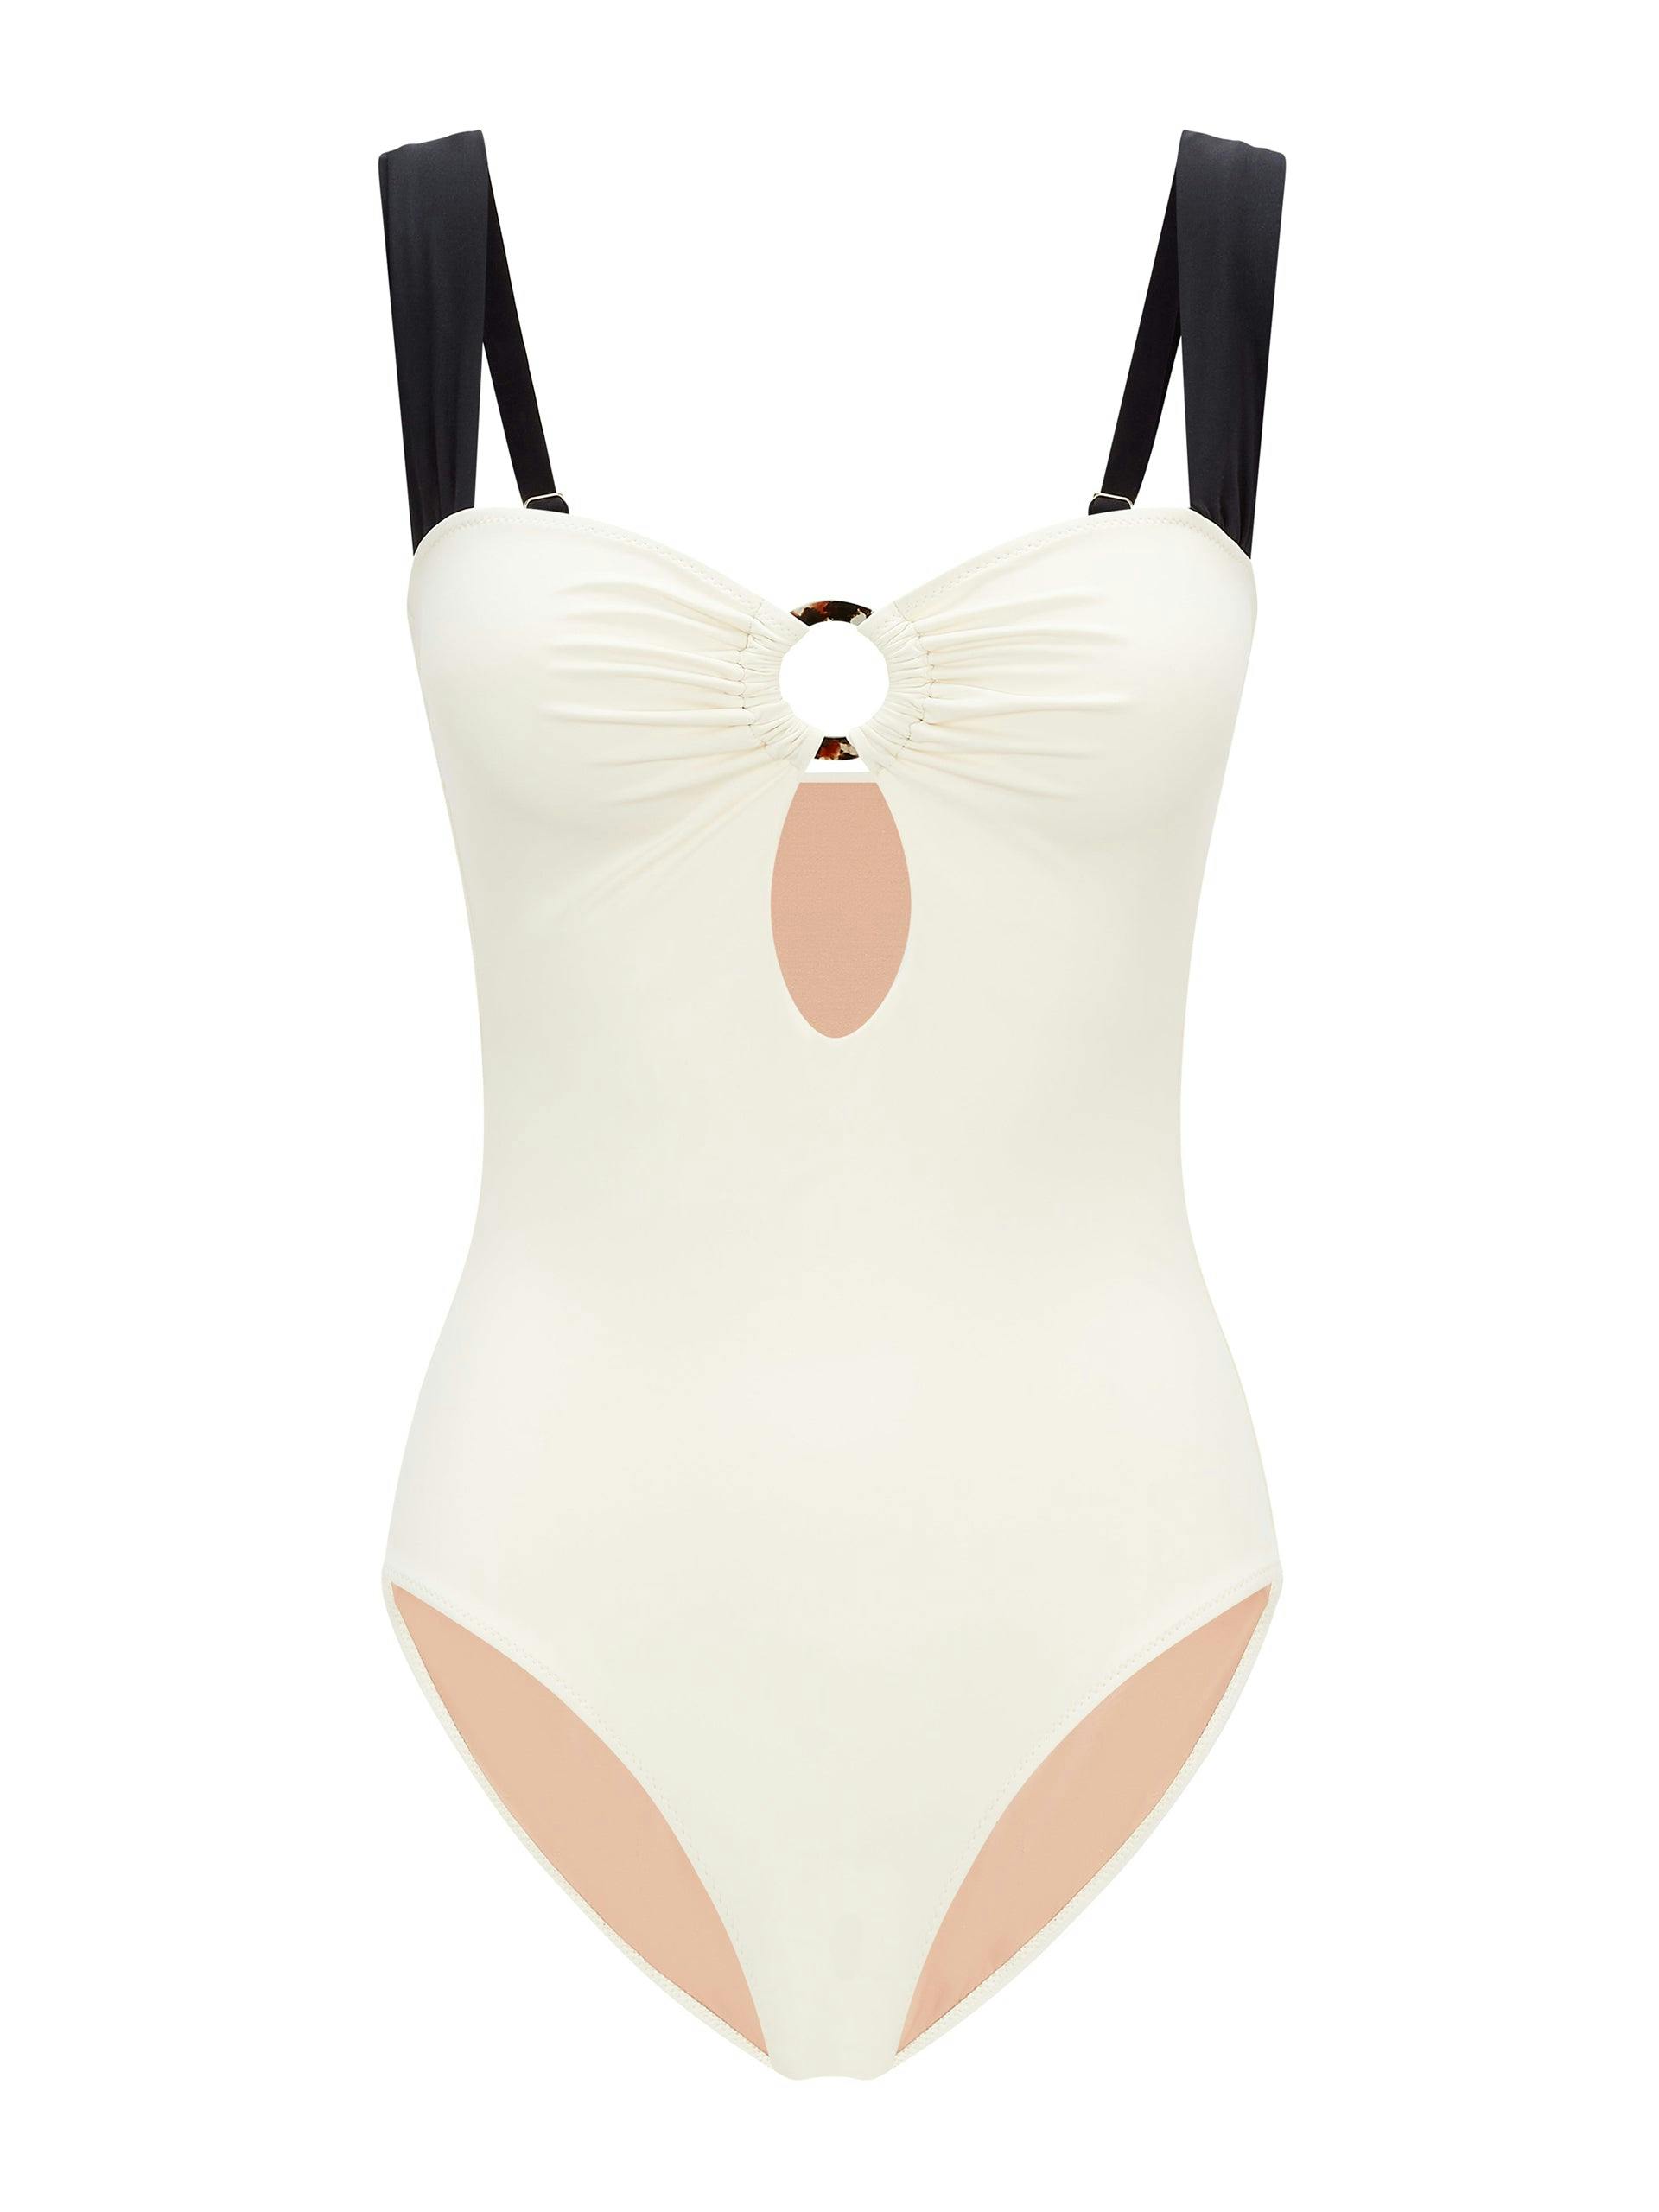 Cream and black Amalie swimsuit